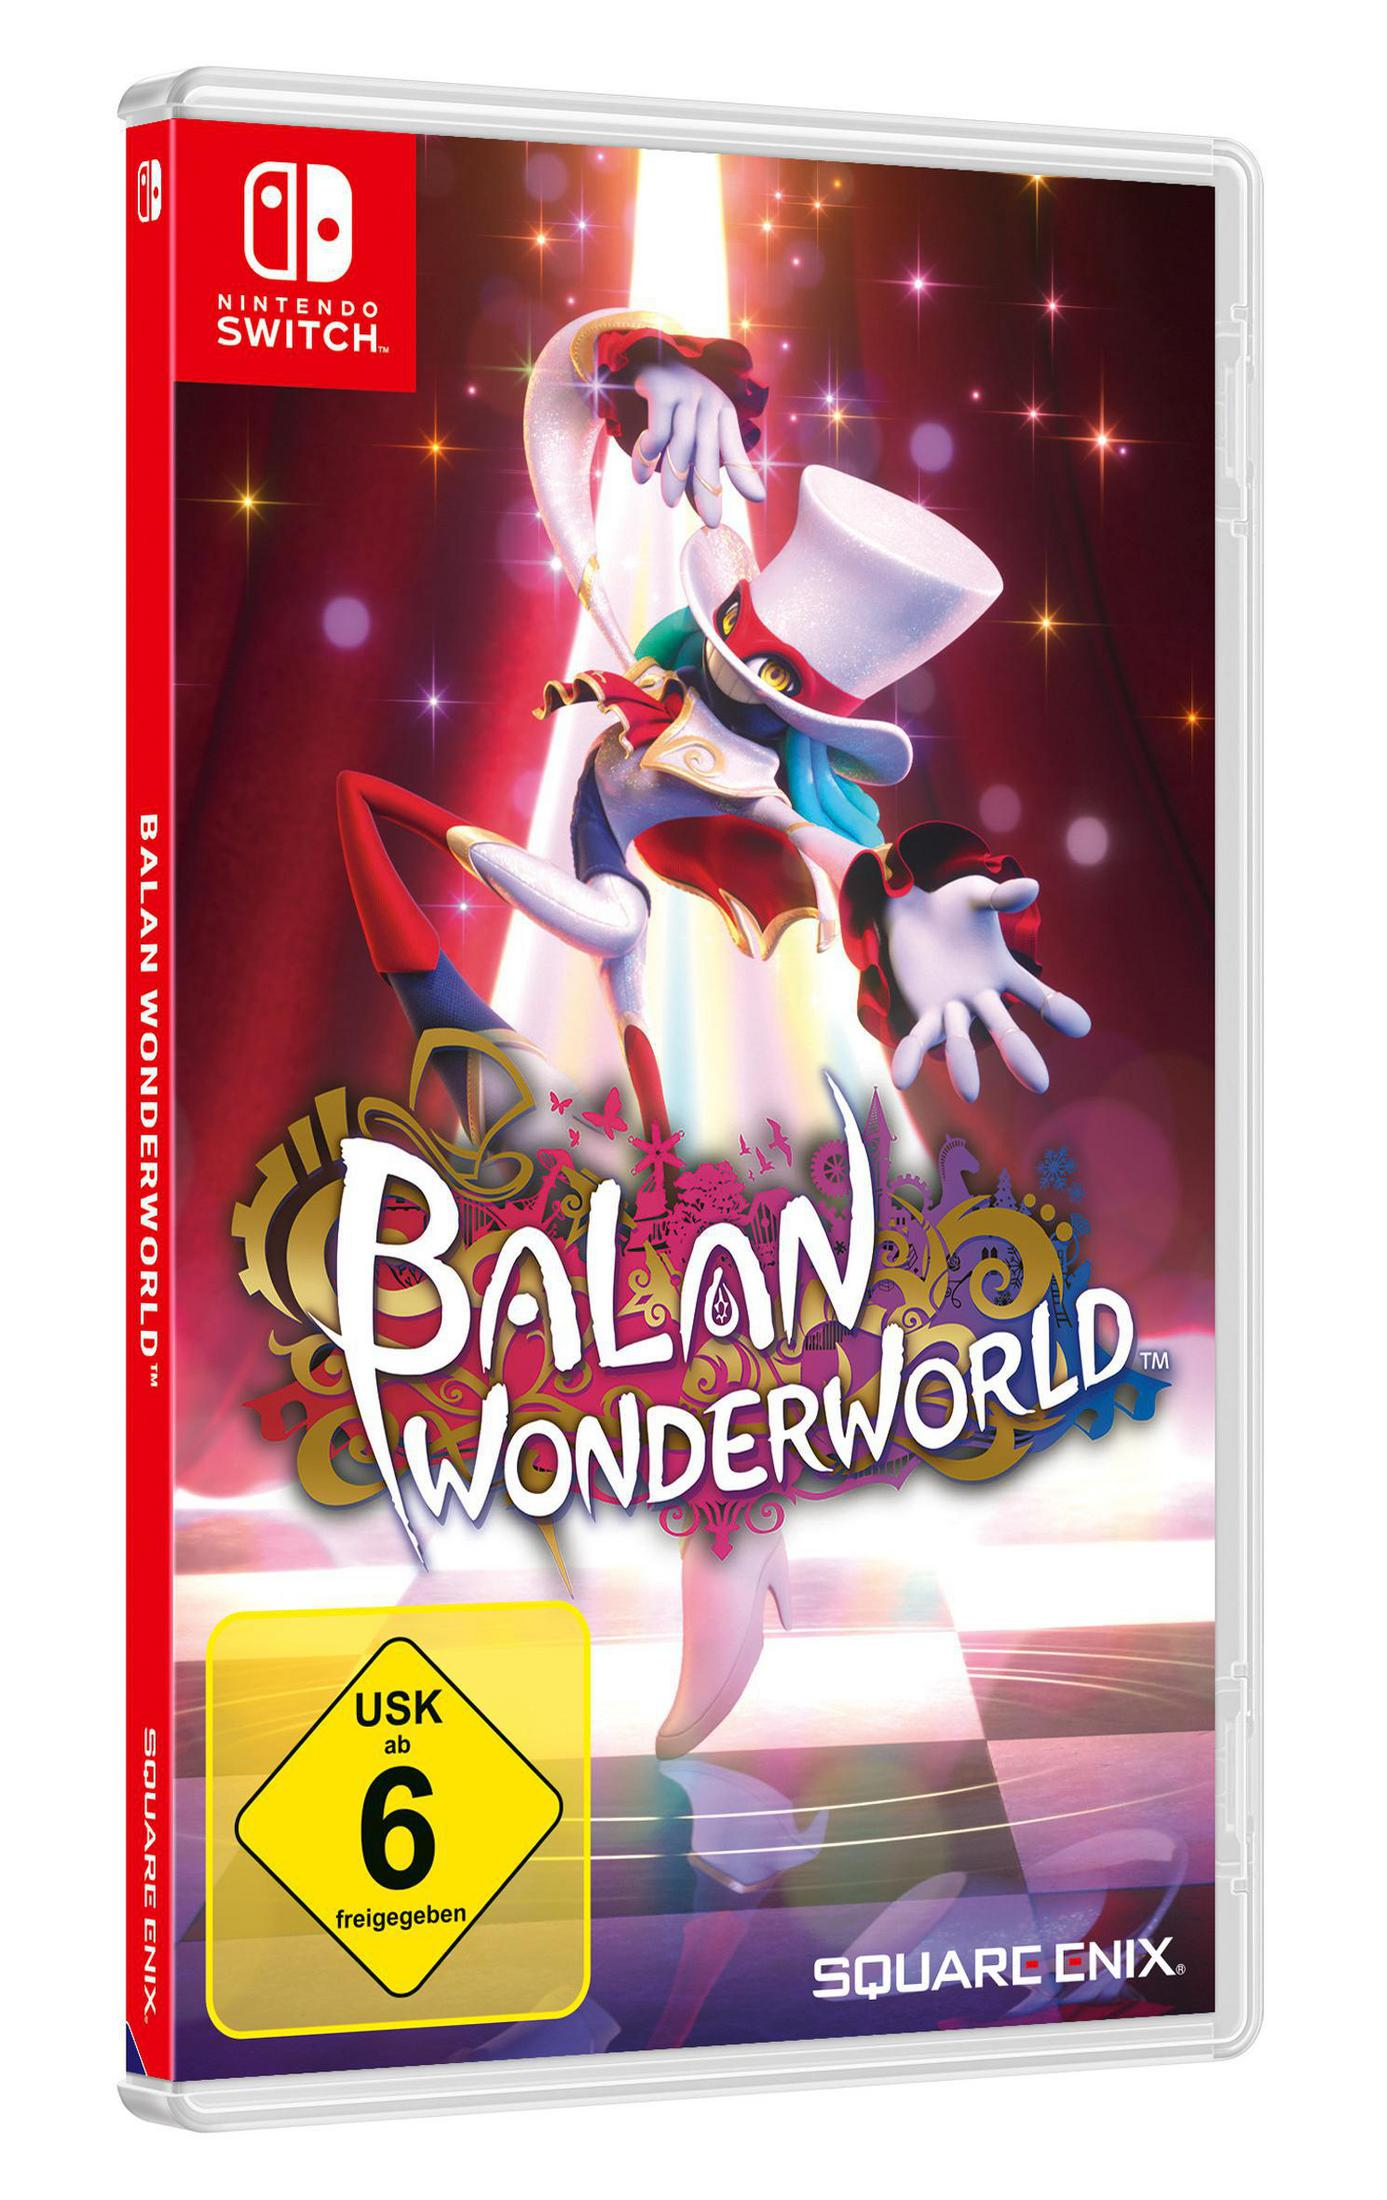 Switch] - Wonderworld Balan [Nintendo